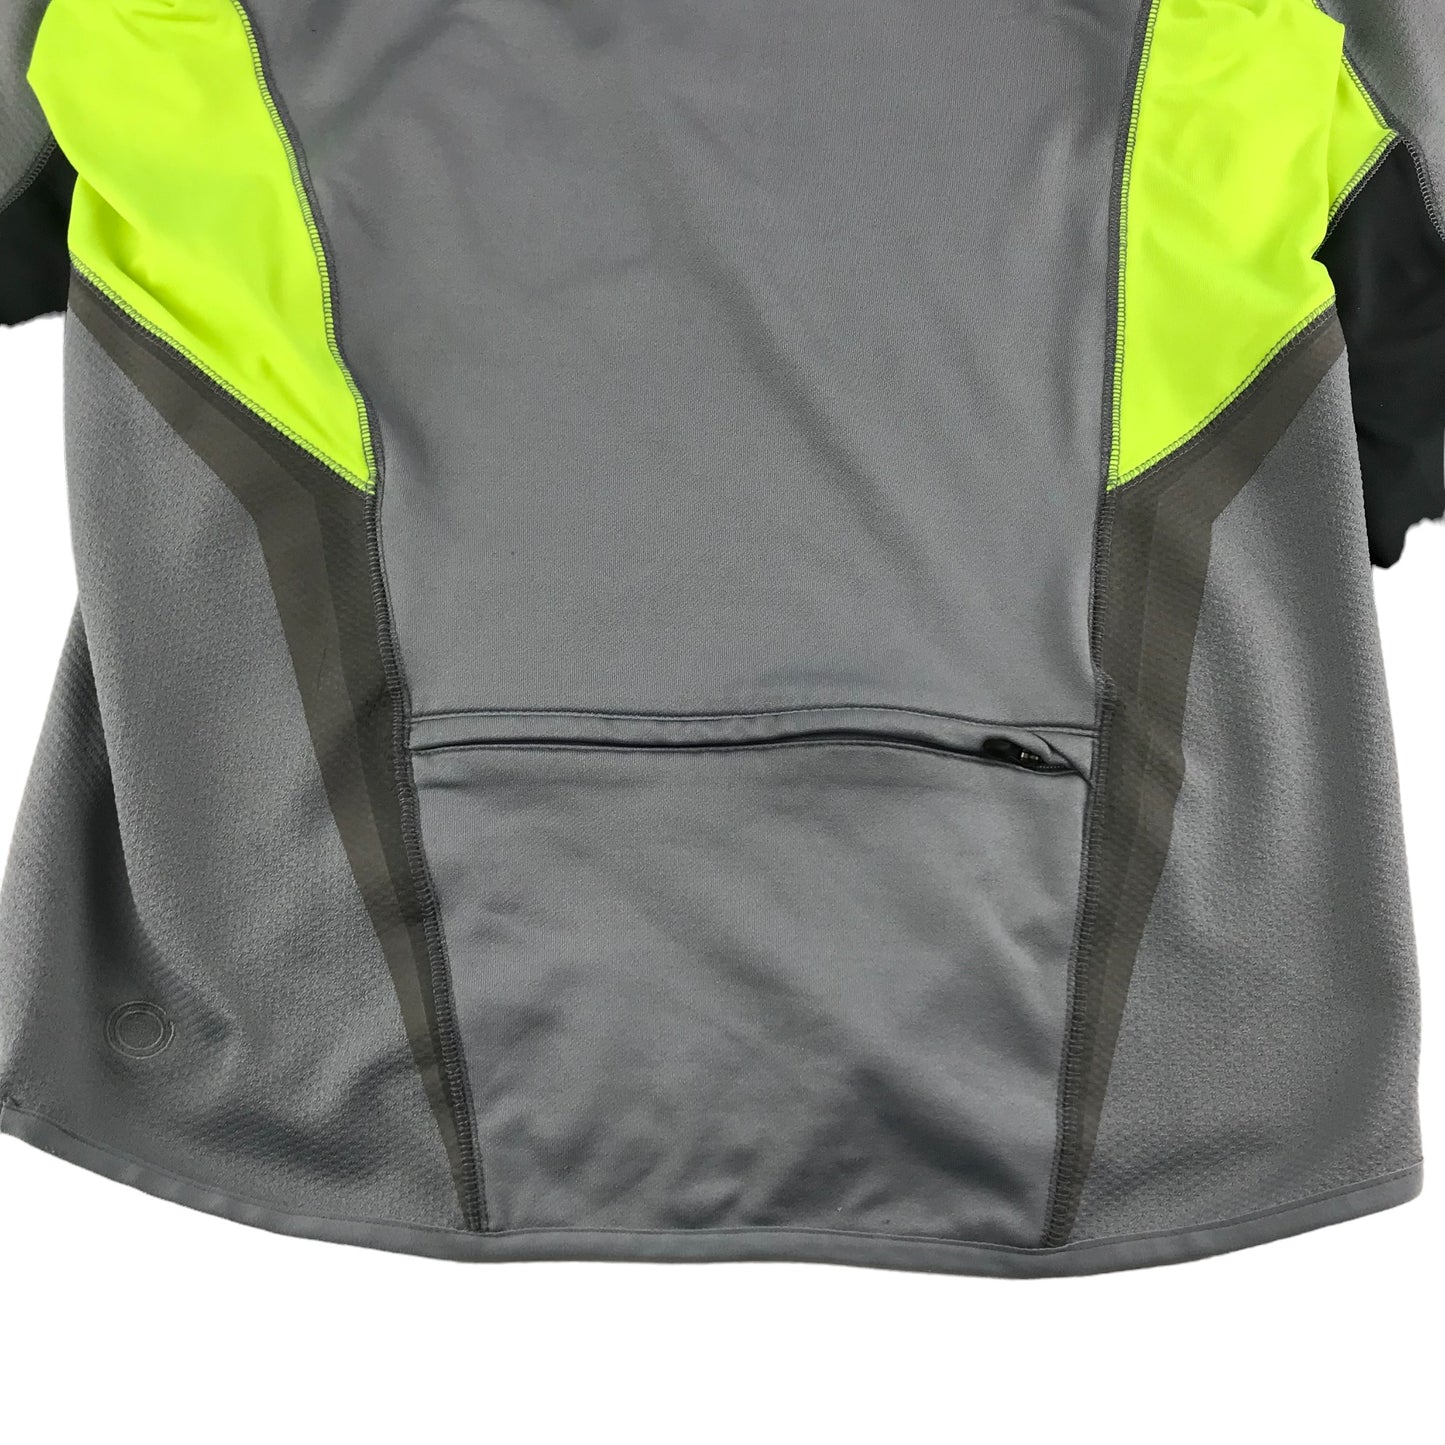 Nike Sports Top Age 14-16 Size Large Grey Half Zipper Long Sleeve Sweatshirt